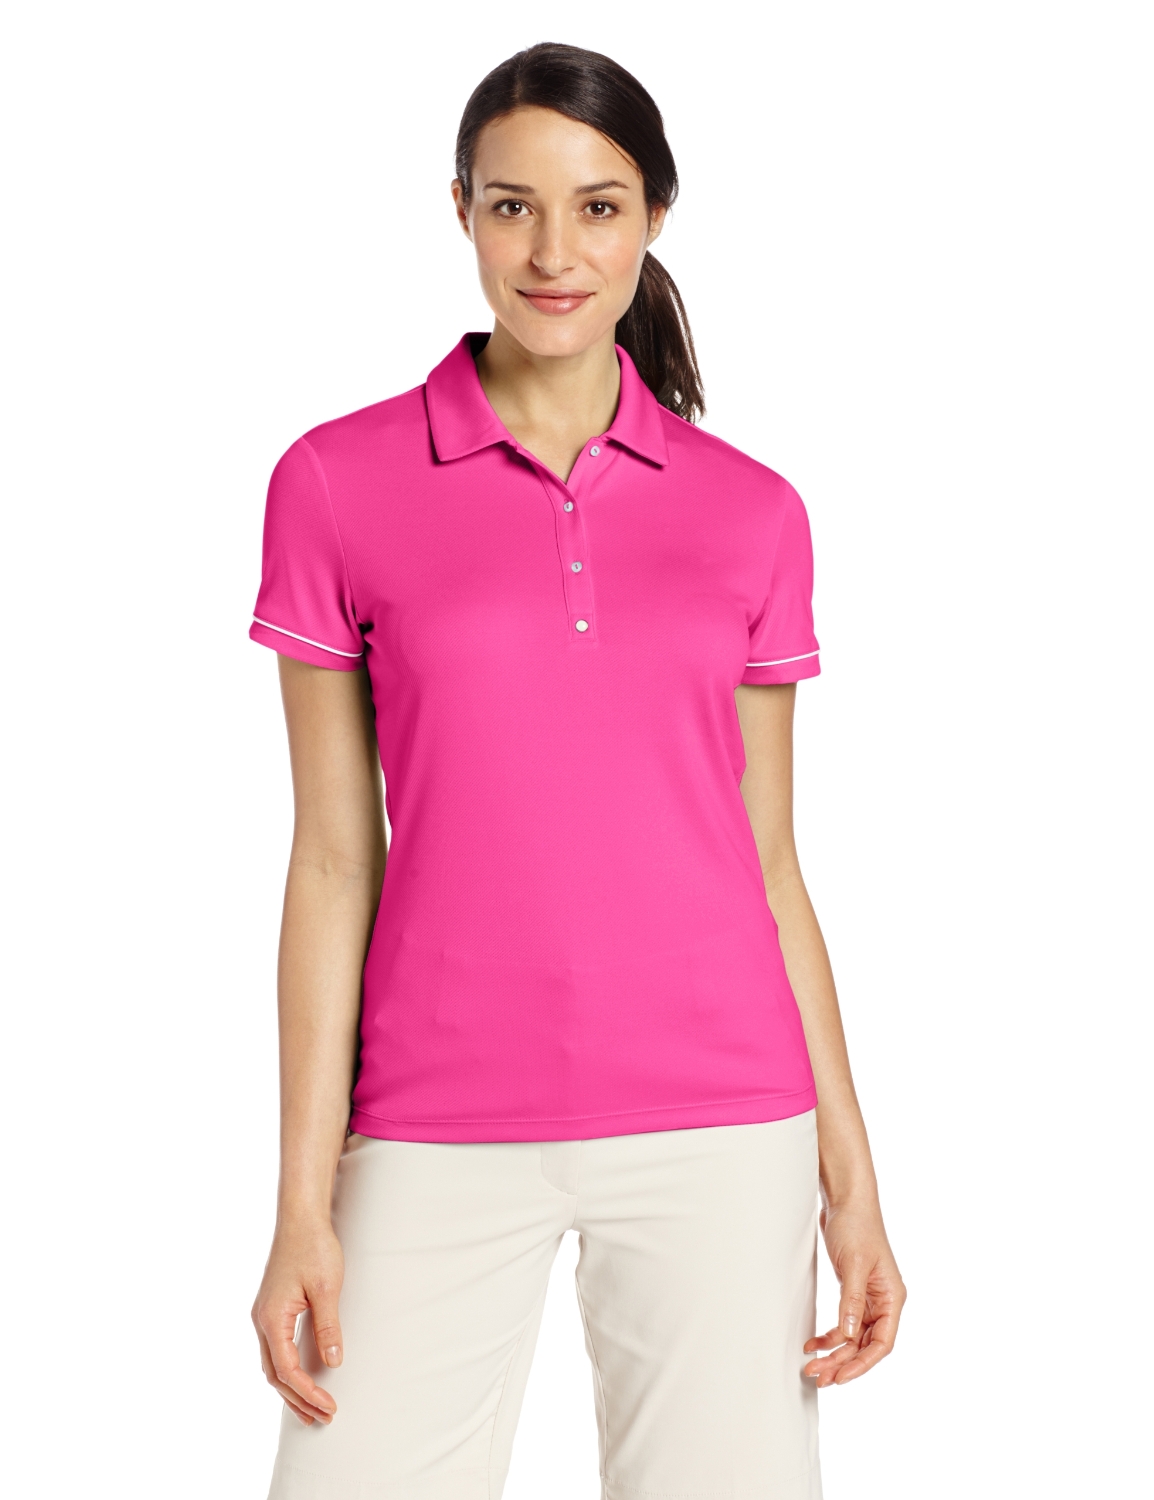 Buy Puma Womens Golf Polo Shirts Lowest 